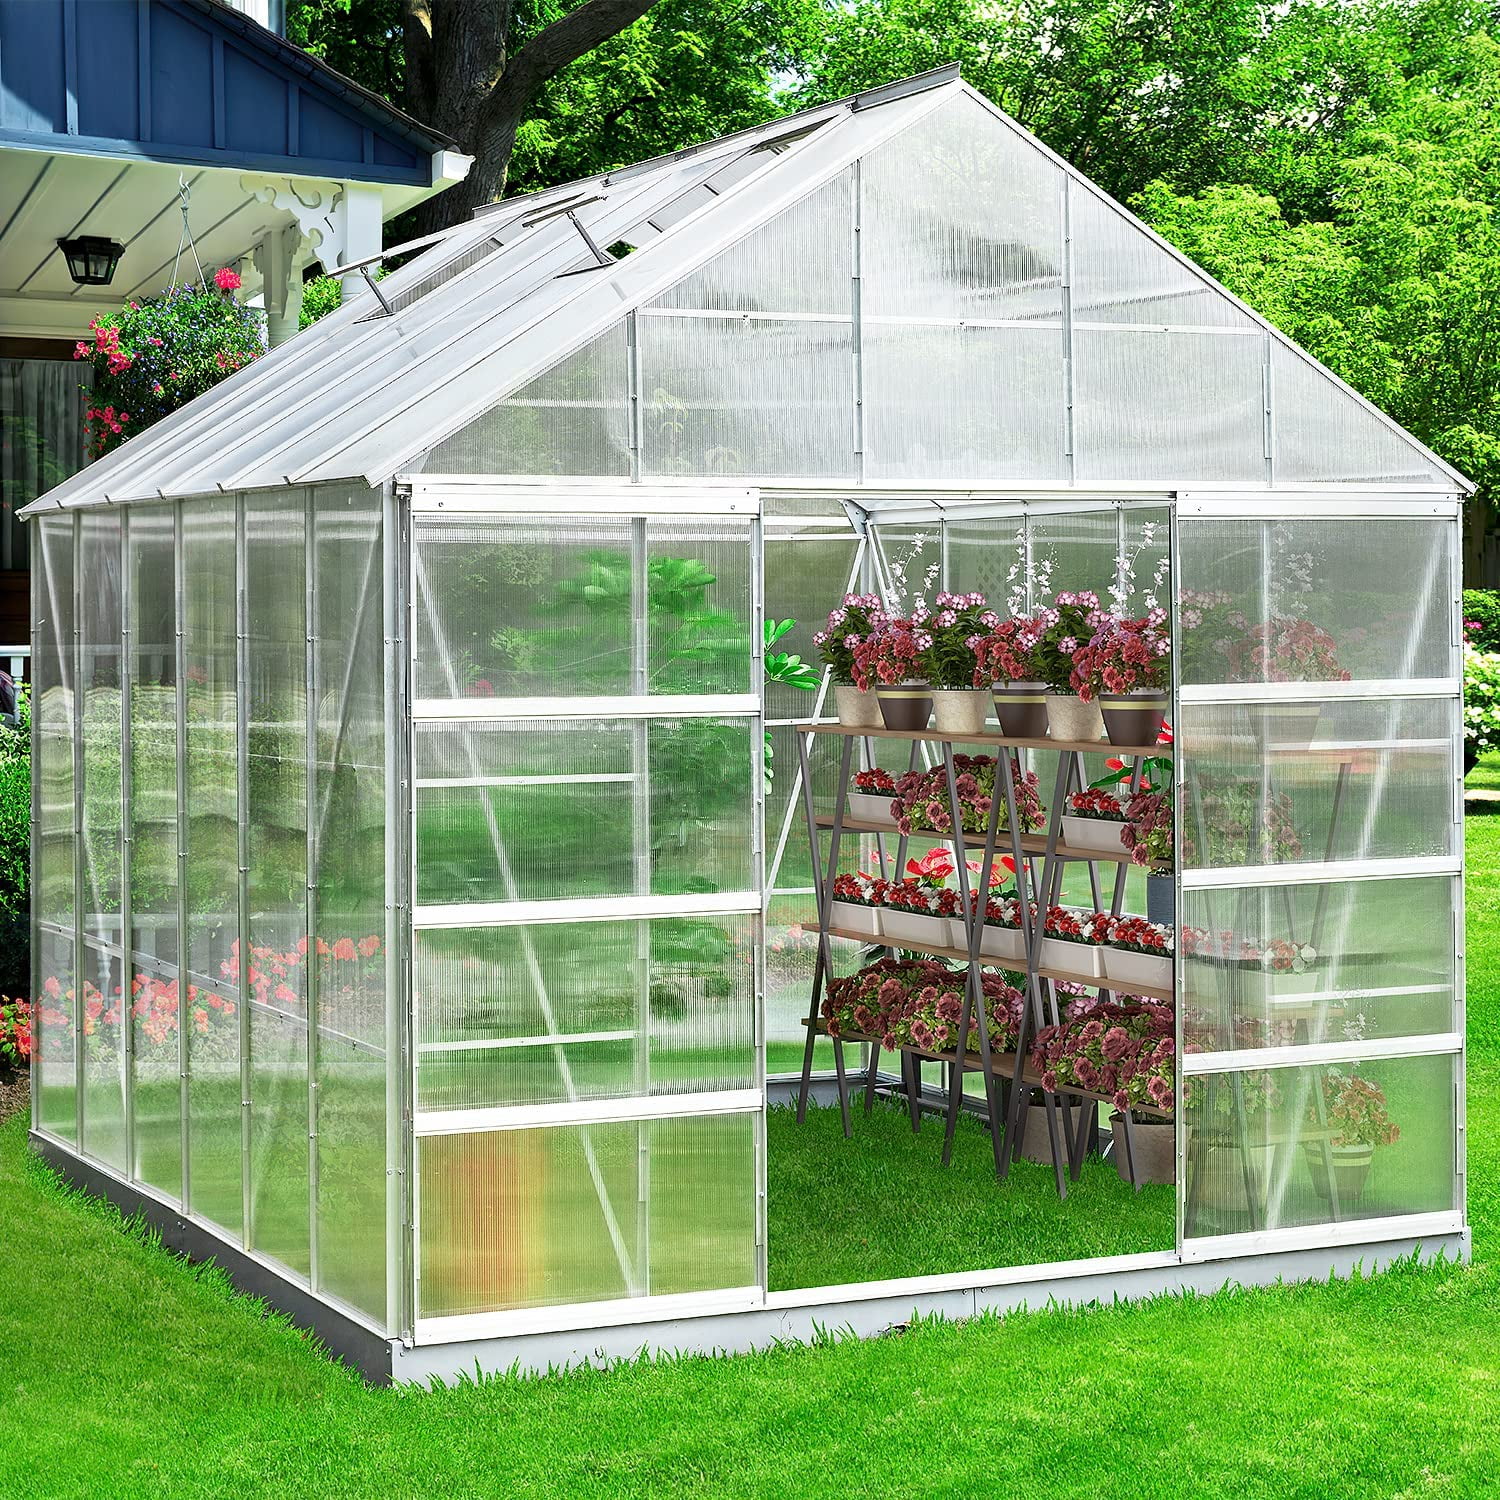 ZENY Mini Walk-in Green House Garden 3 Tier 6 Shelves Movable 